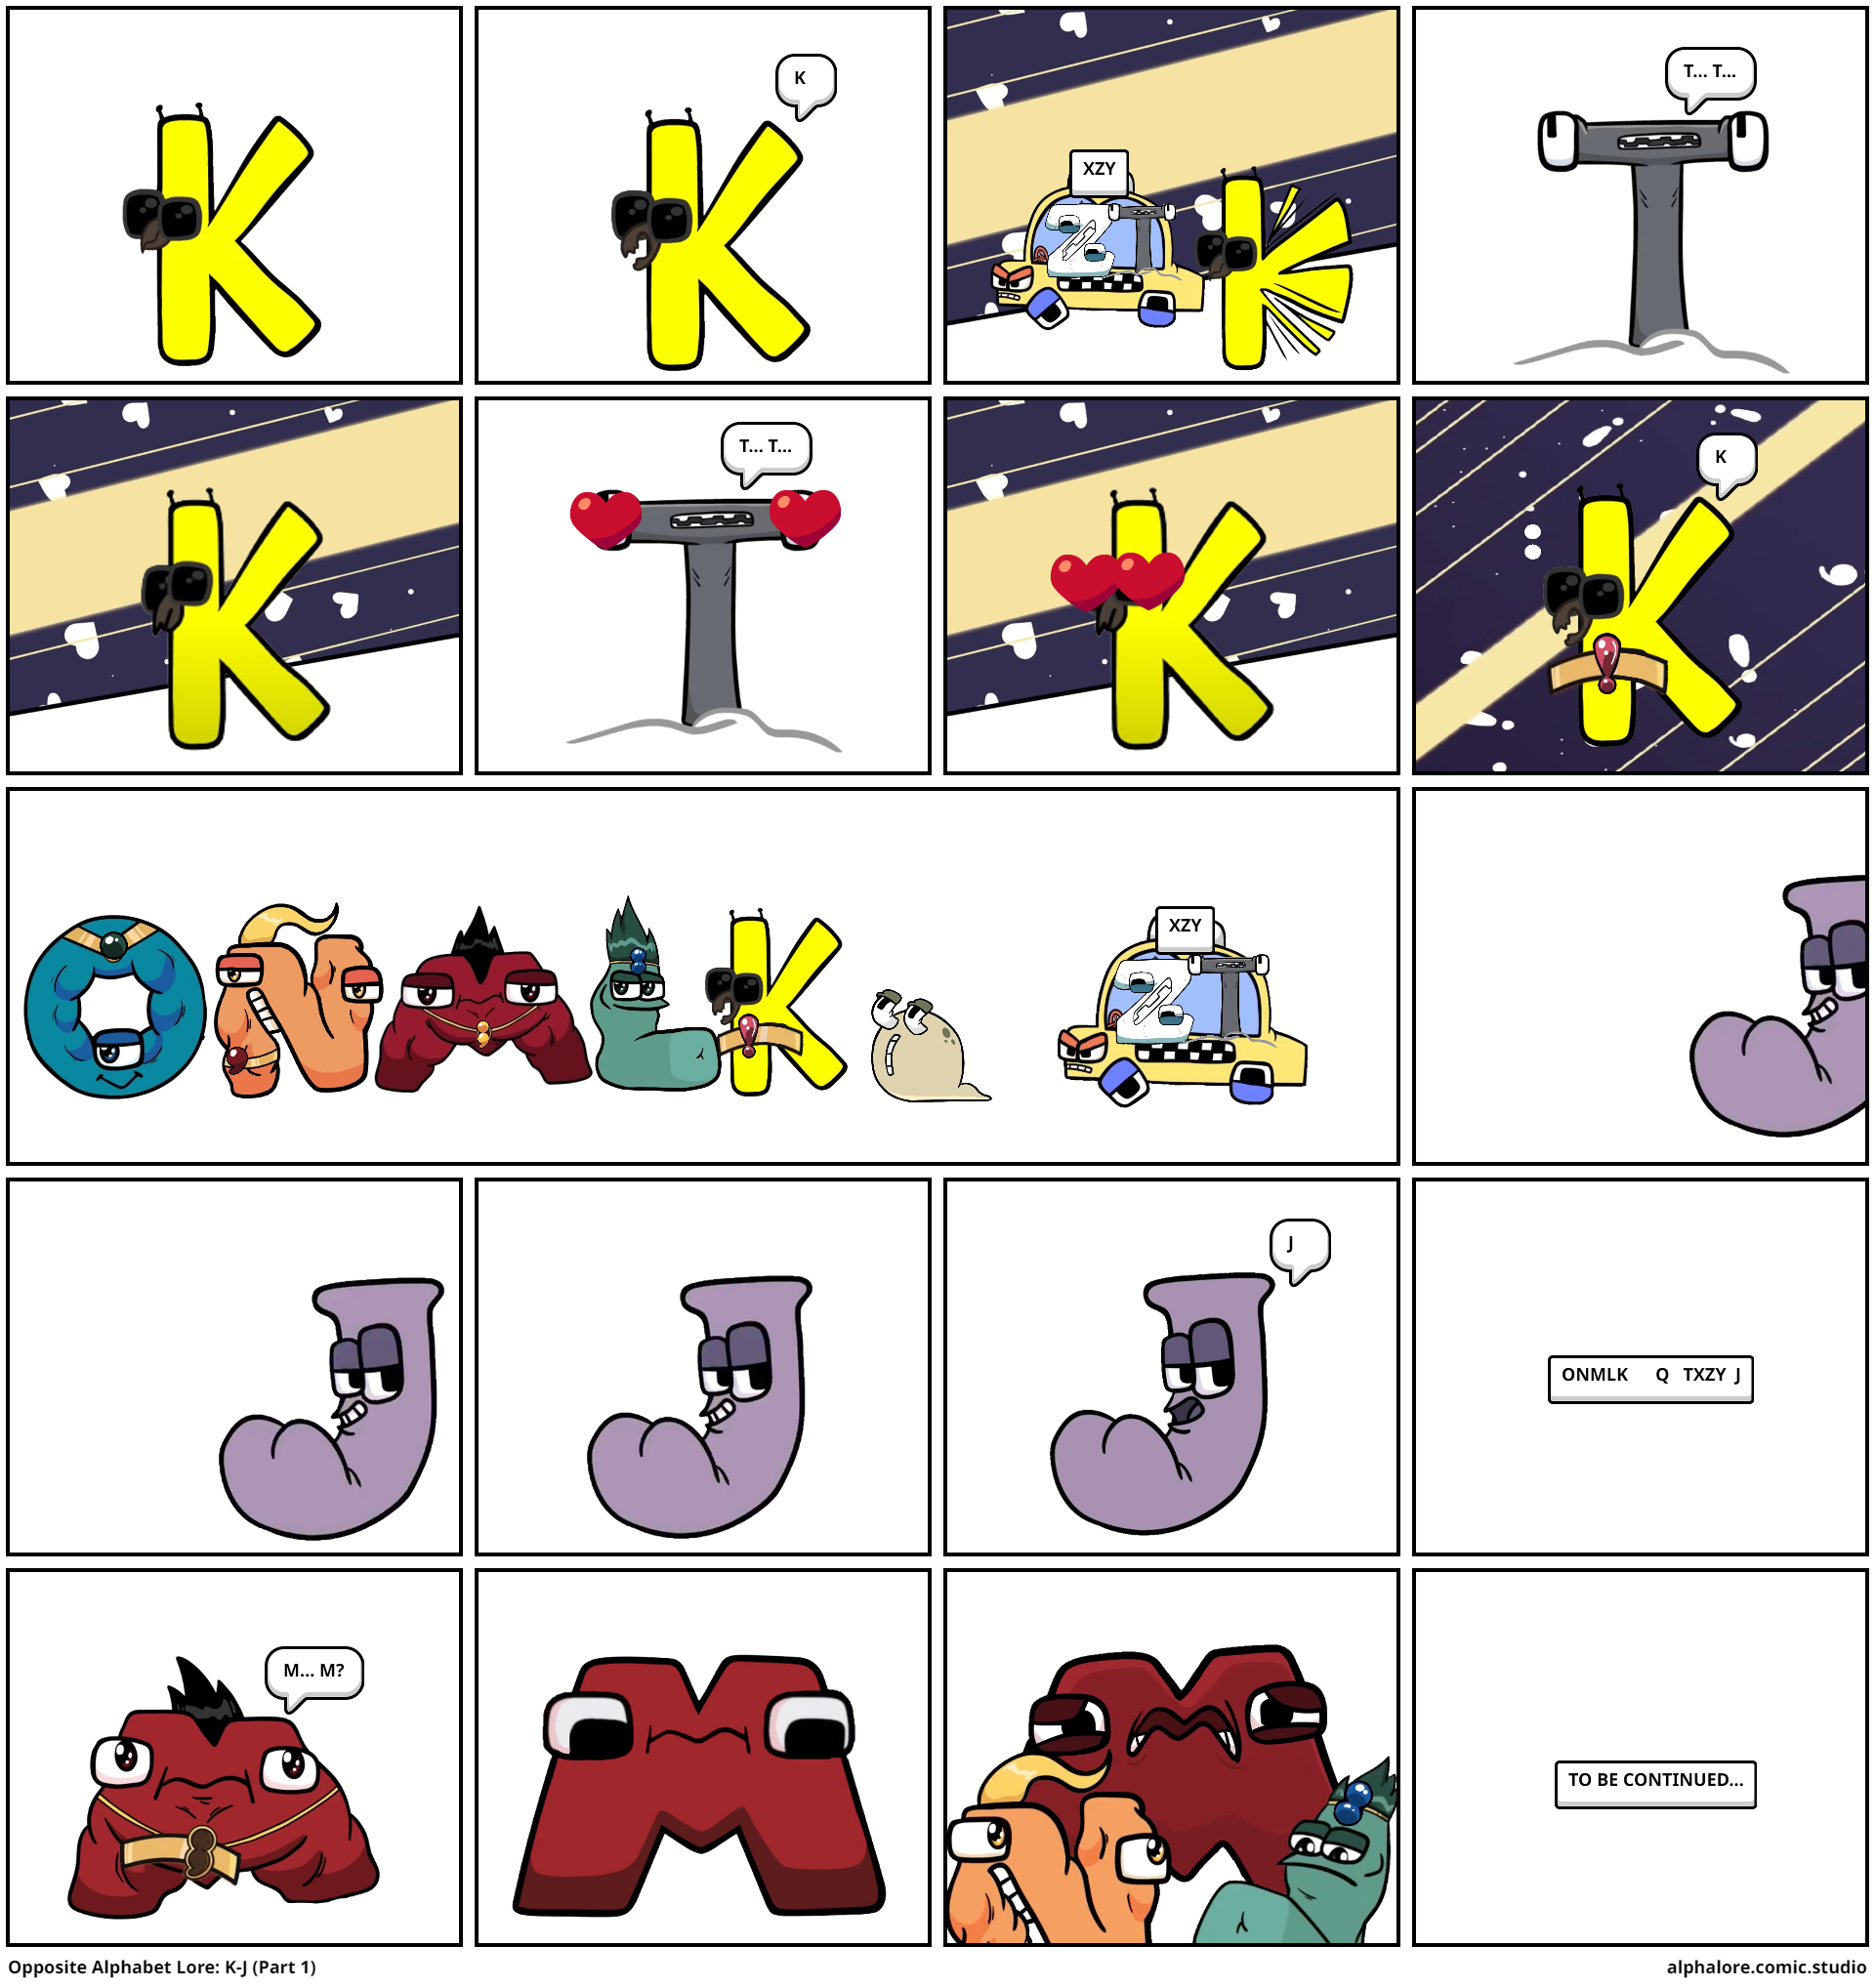 Opposite Alphabet Lore: K-J (Part 1)